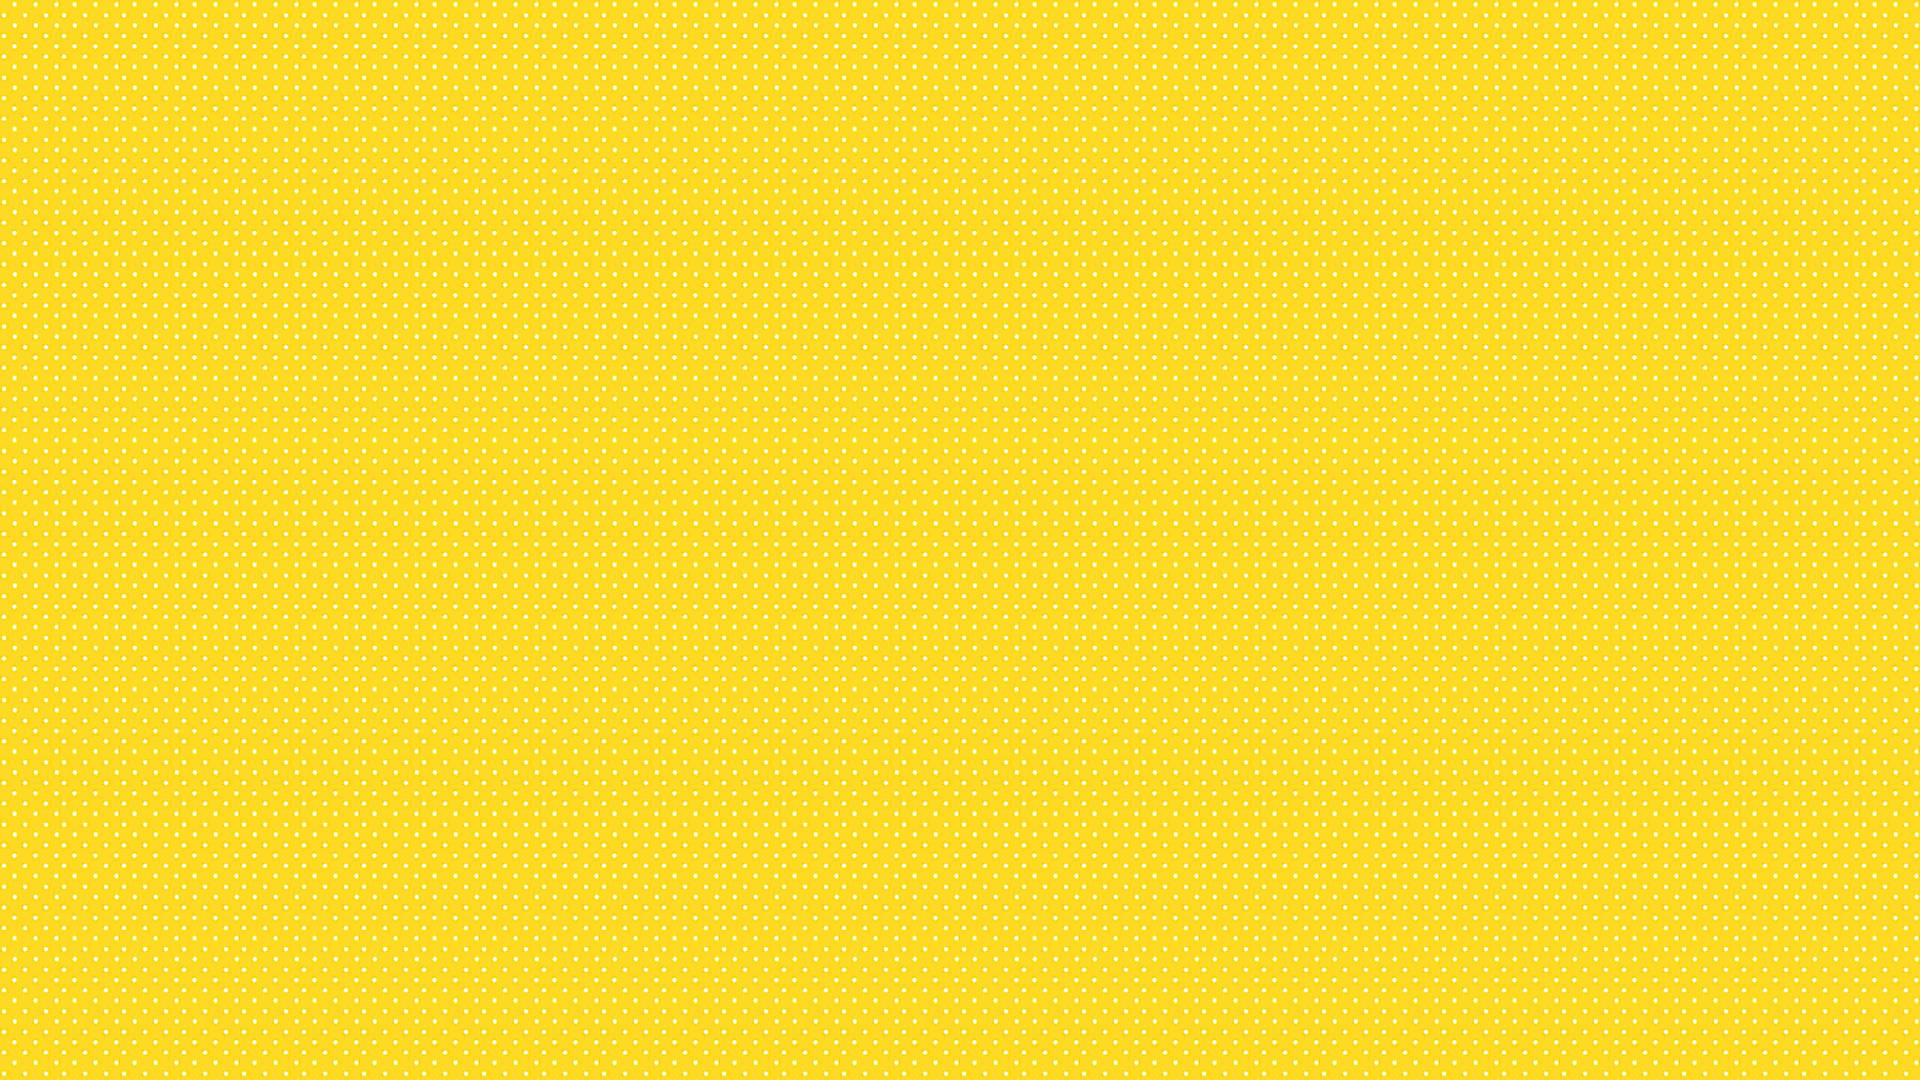 Plain Yellow With White Dots Wallpaper